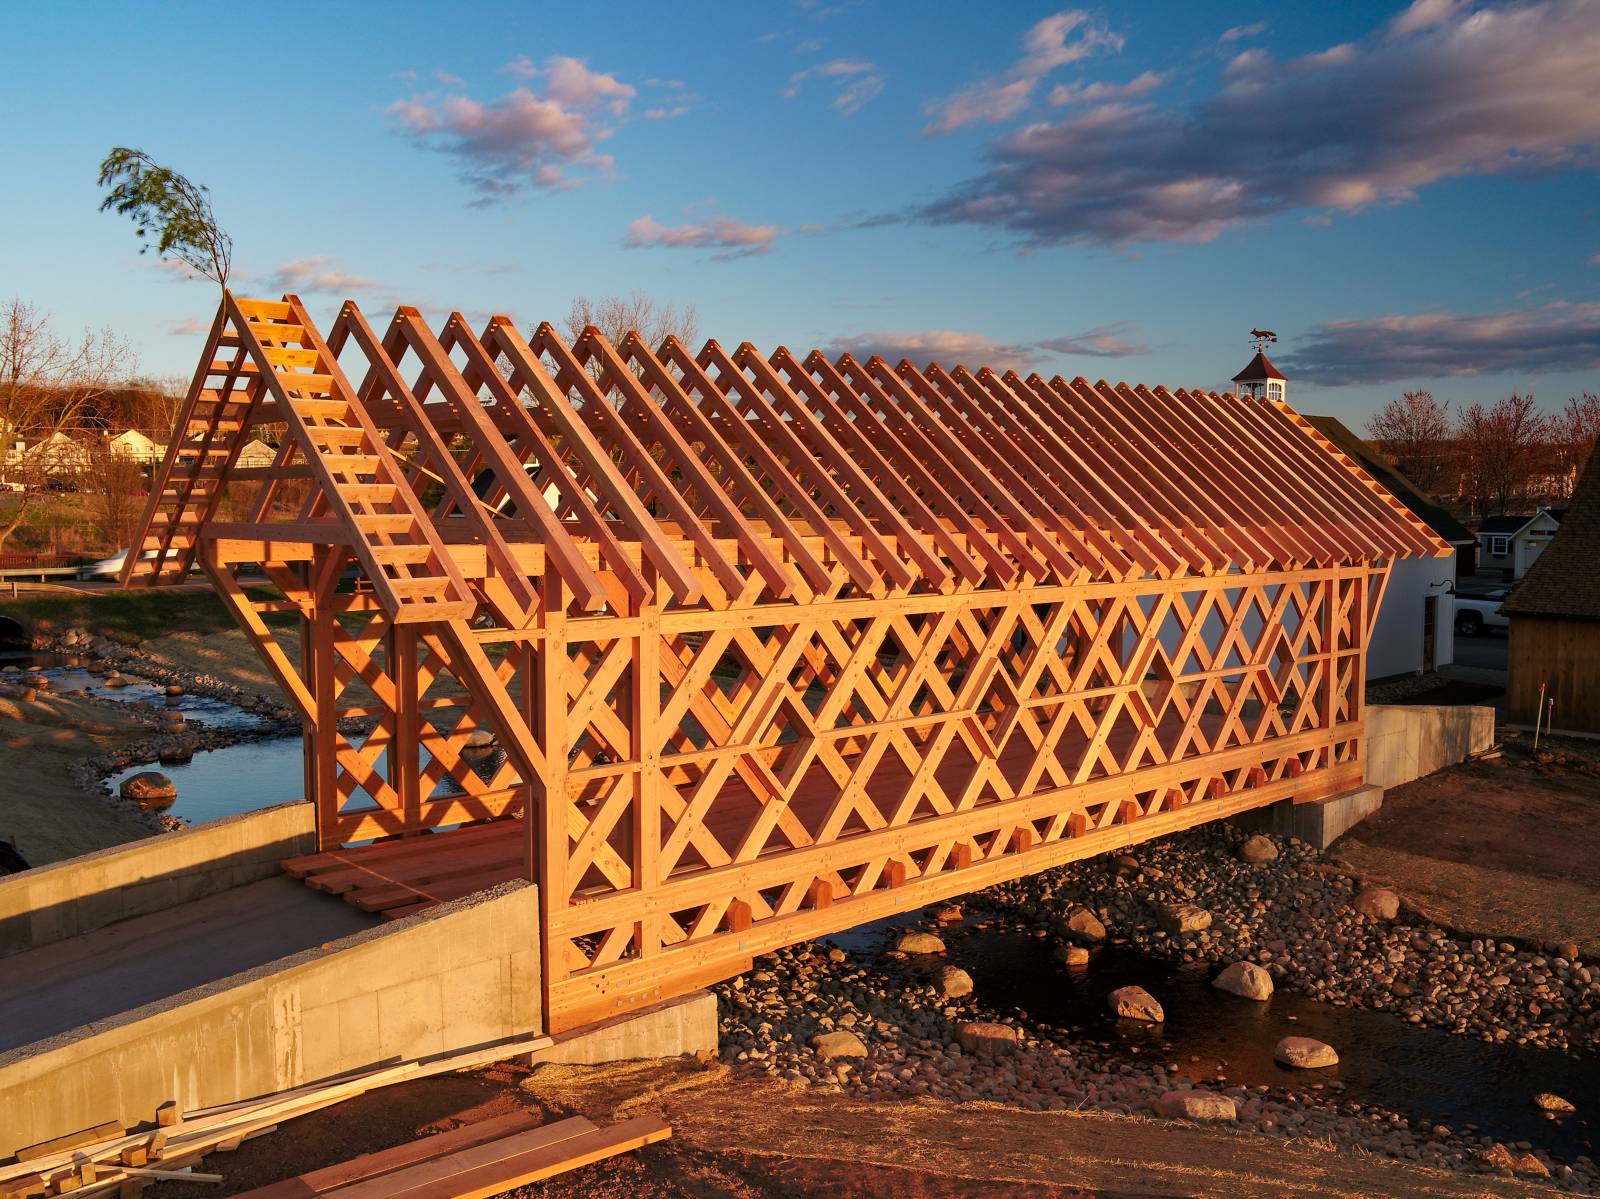 The Barn Yard Covered Bridge - Timber Frame